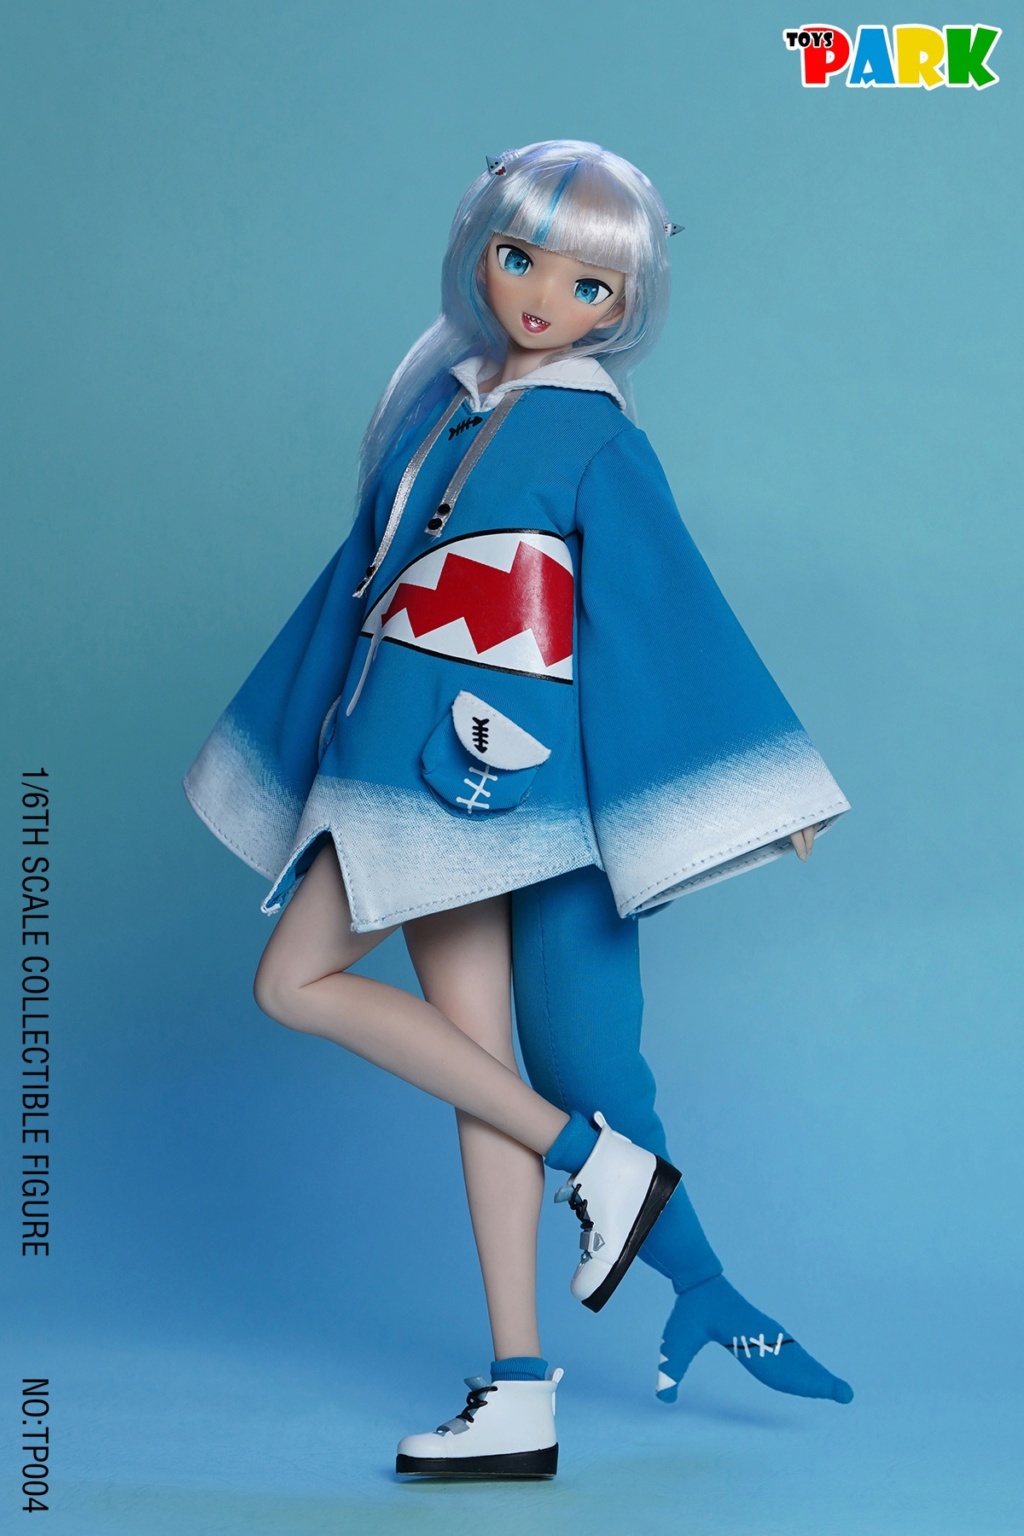 SharkGirl - NEW PRODUCT: TOYS PARK: 1/6 Shark Girl Accessories Set #TP004 7e1a9510